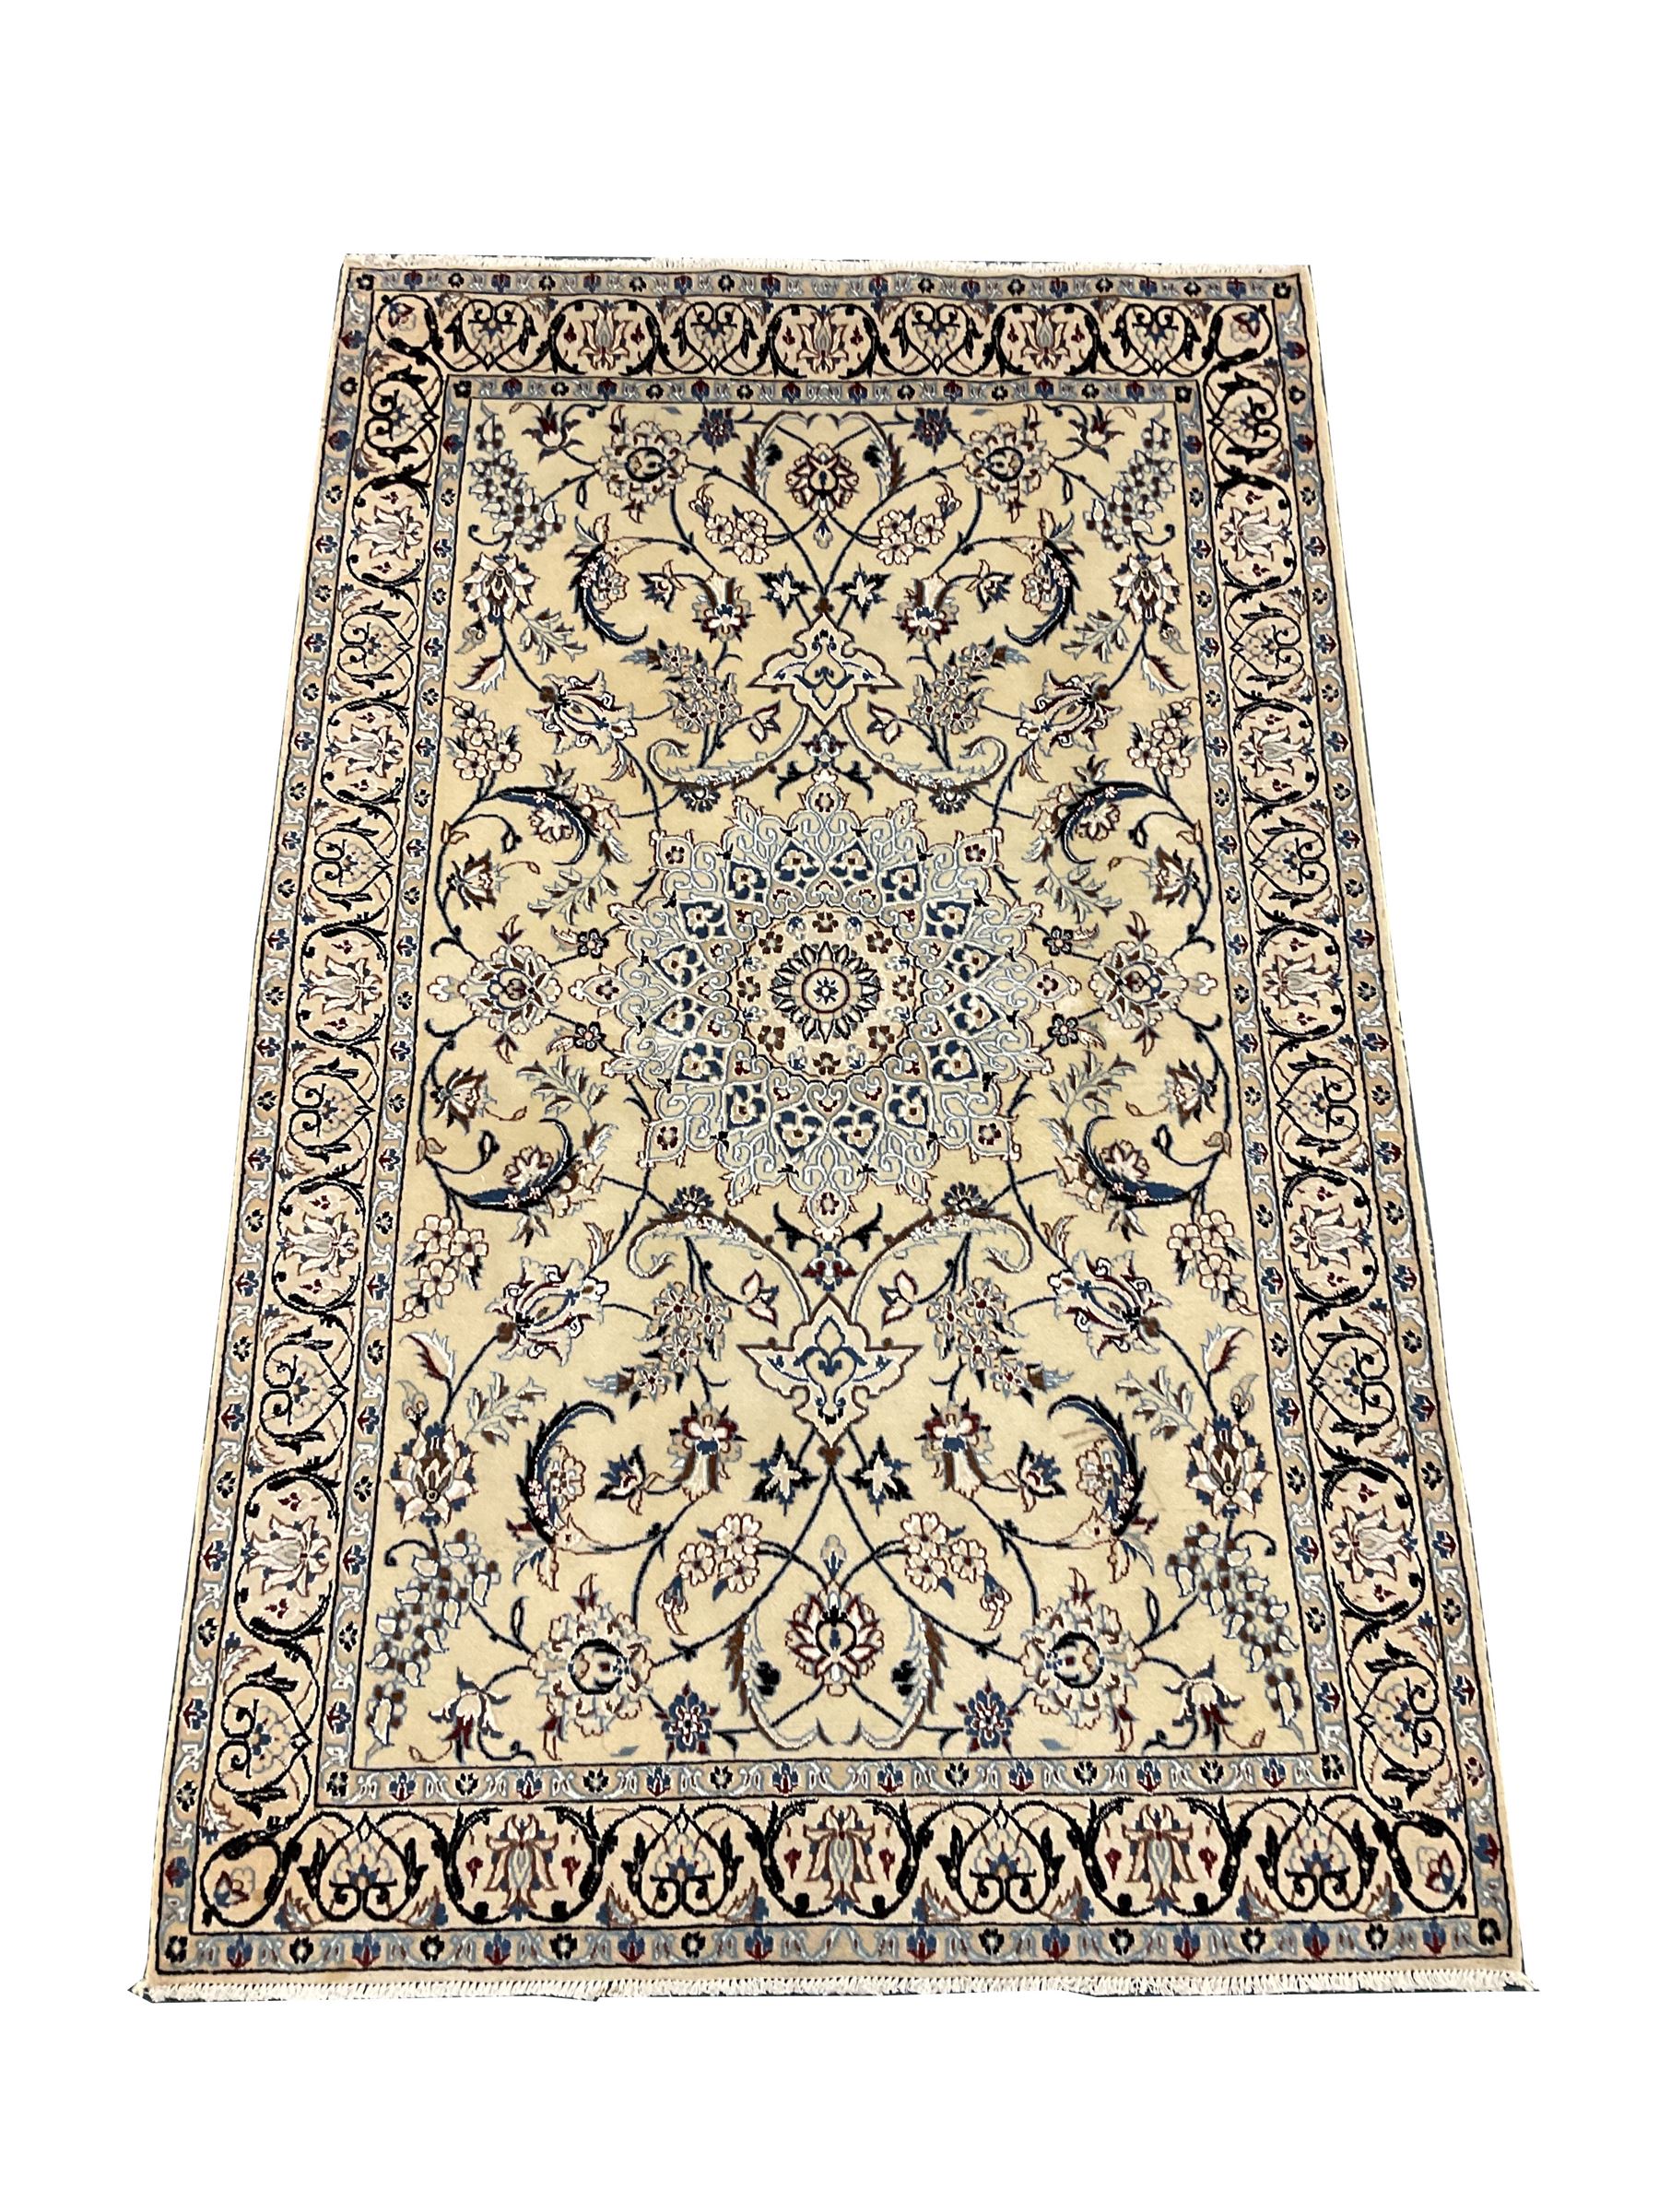 Fine Kashan ivory ground rug